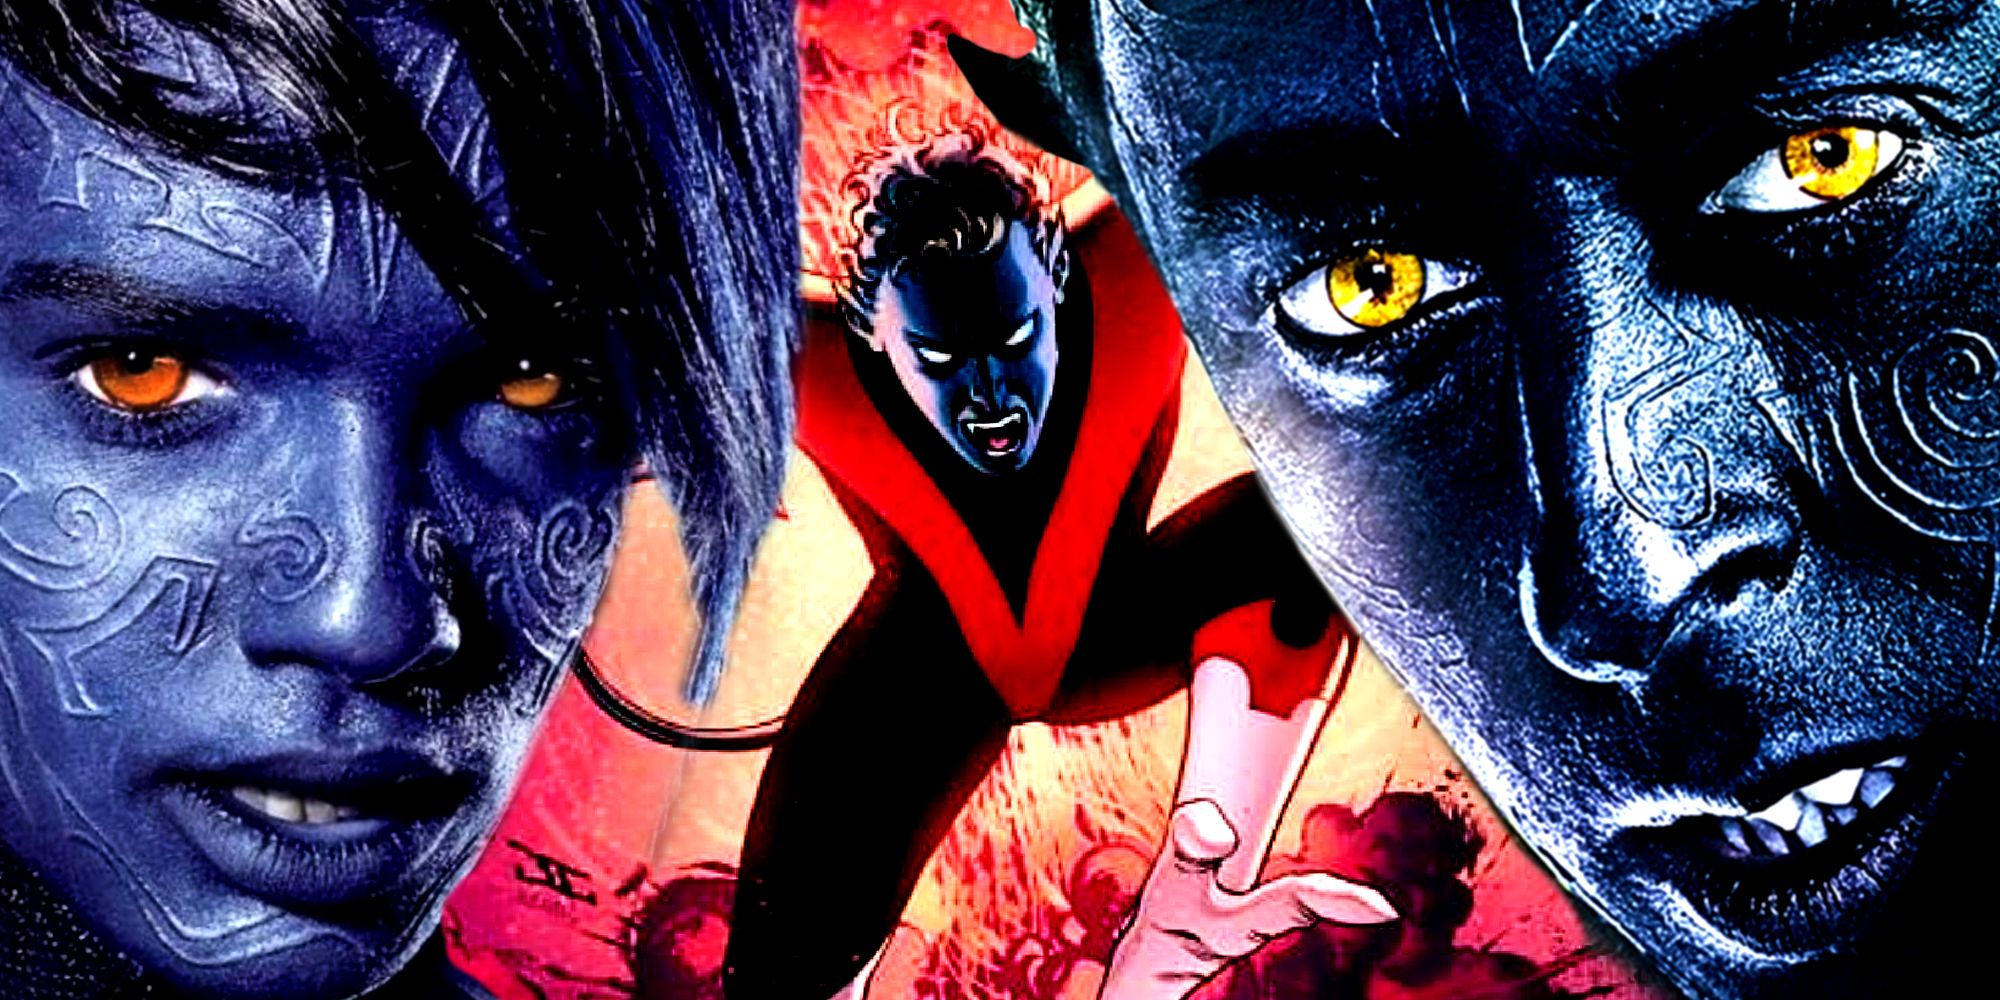 Alan Cumming and Kodi Smit-McPhee as Nightcrawler in X2 and X-Men Apocalypse with Kurt Wagner teleporting in Marvel Comics